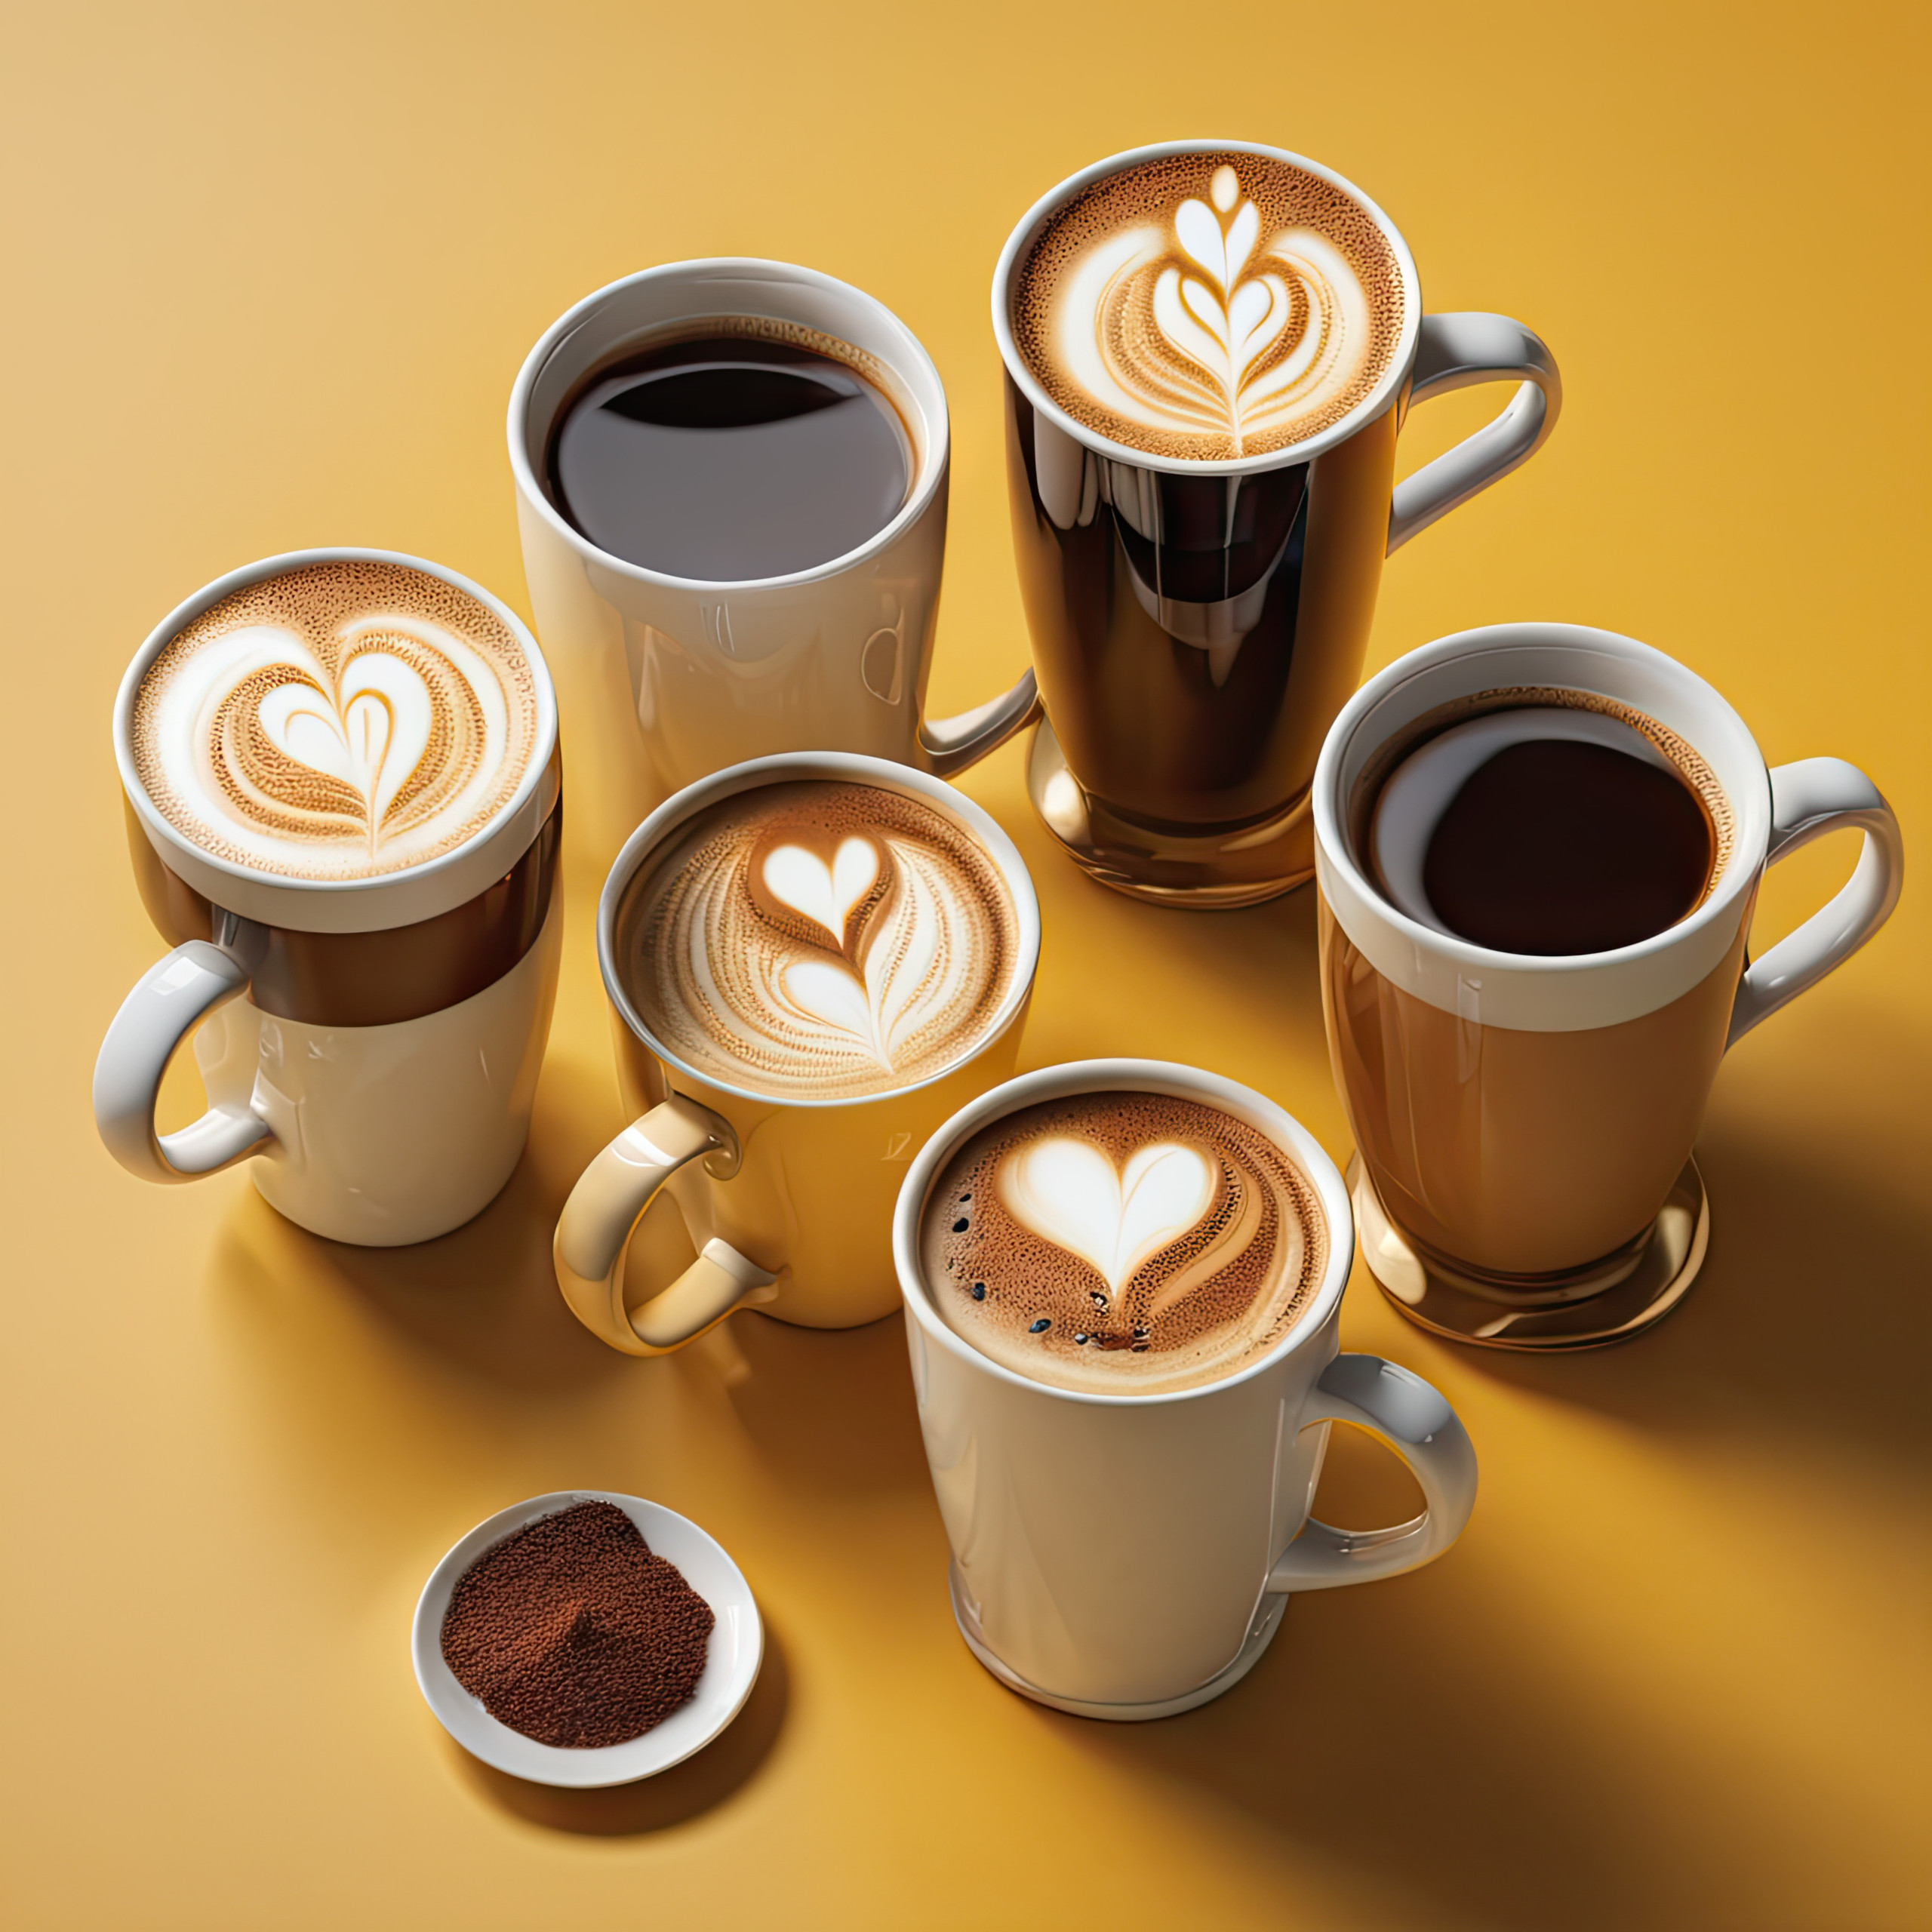 Keurig Dr Pepper Inc.: Immer mehr Haushalte brühen Keurig-Kaffee, die Aktie ist unterbewertet